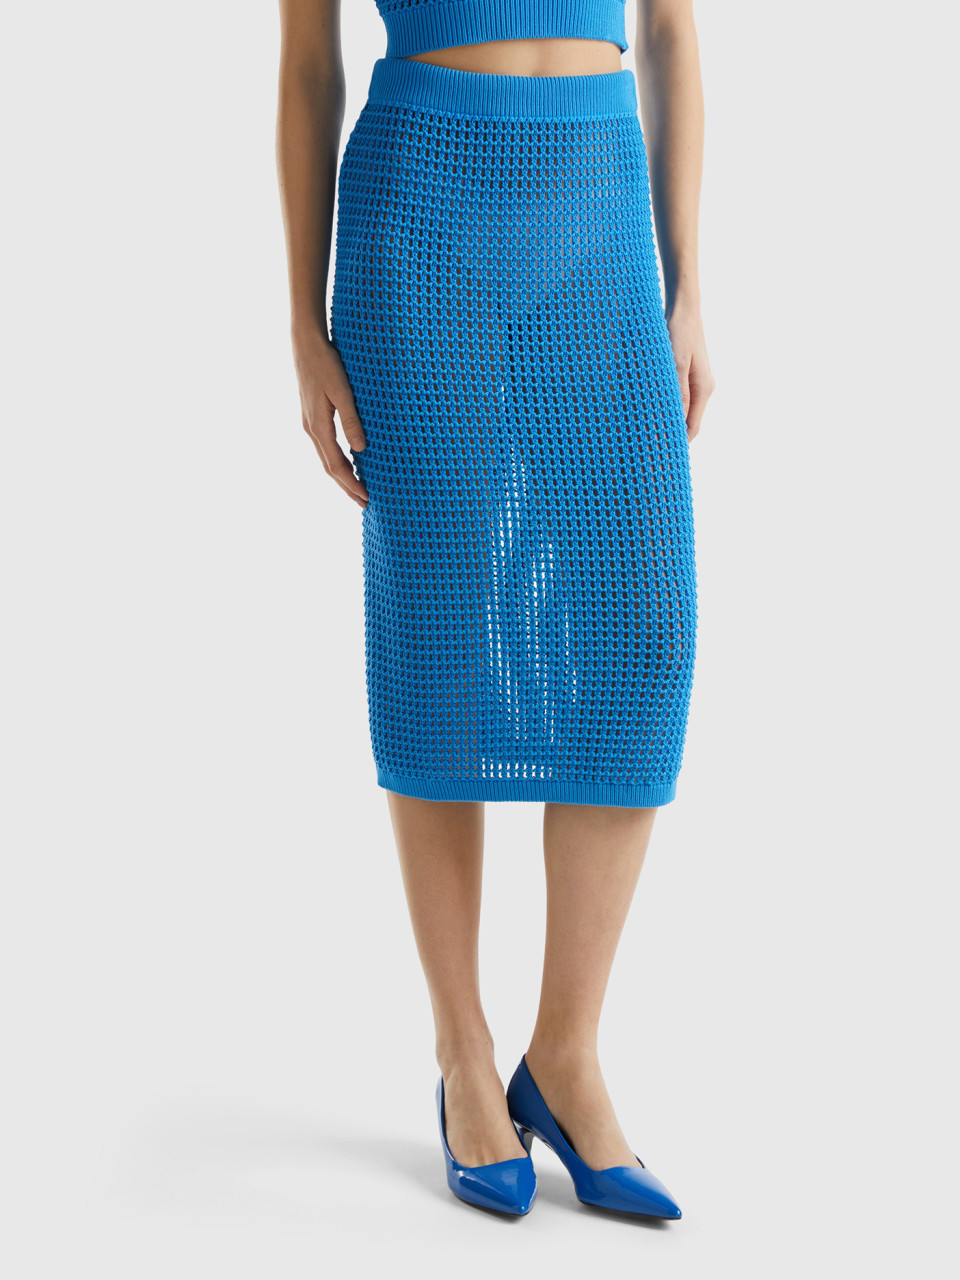 Benetton, Crochet Skirt, Blue, Women